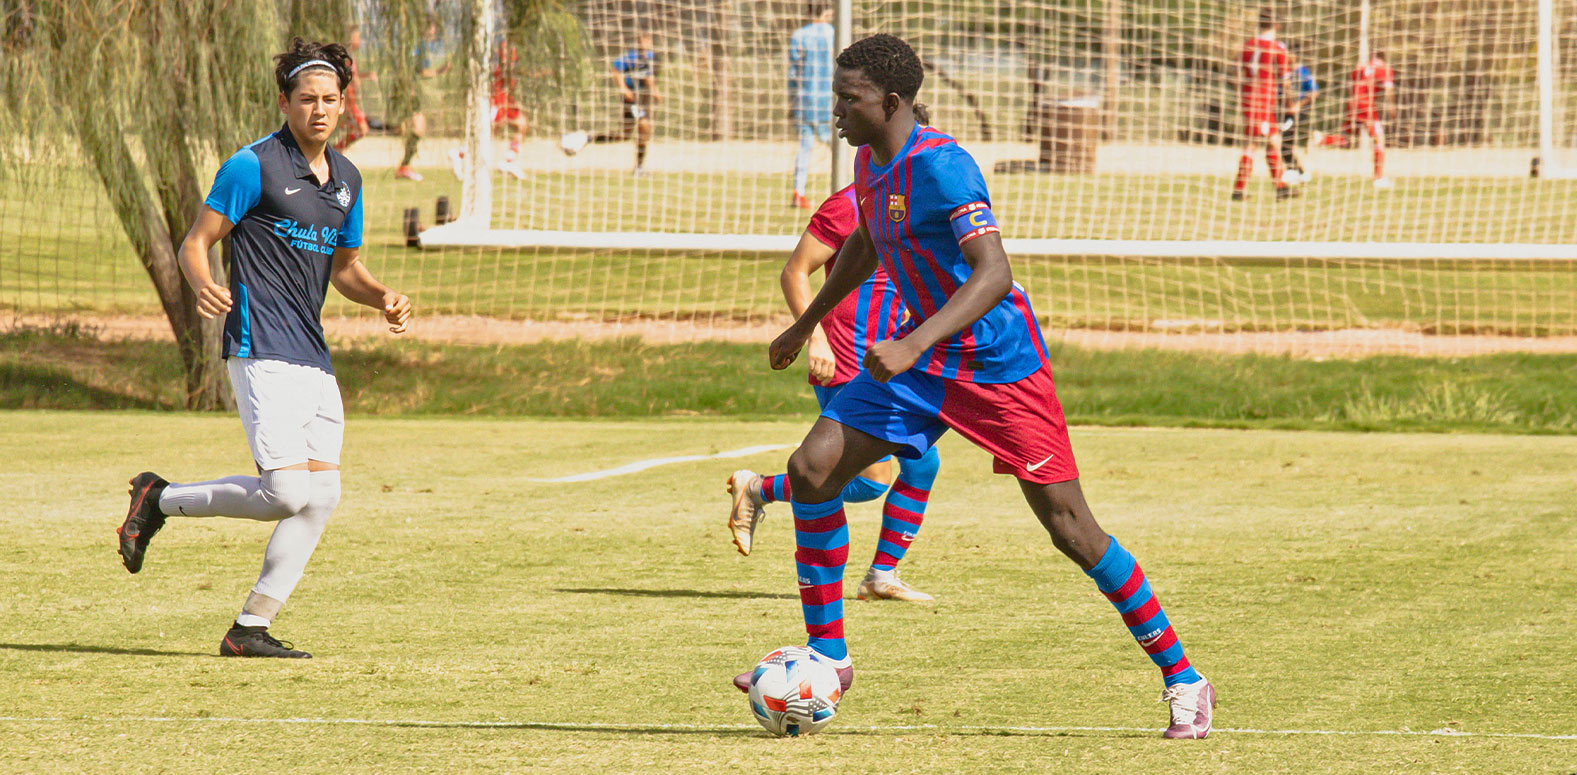 Barca Residency Academy player Korede Osundina driving the ball up the field vs. Chula Vista FC